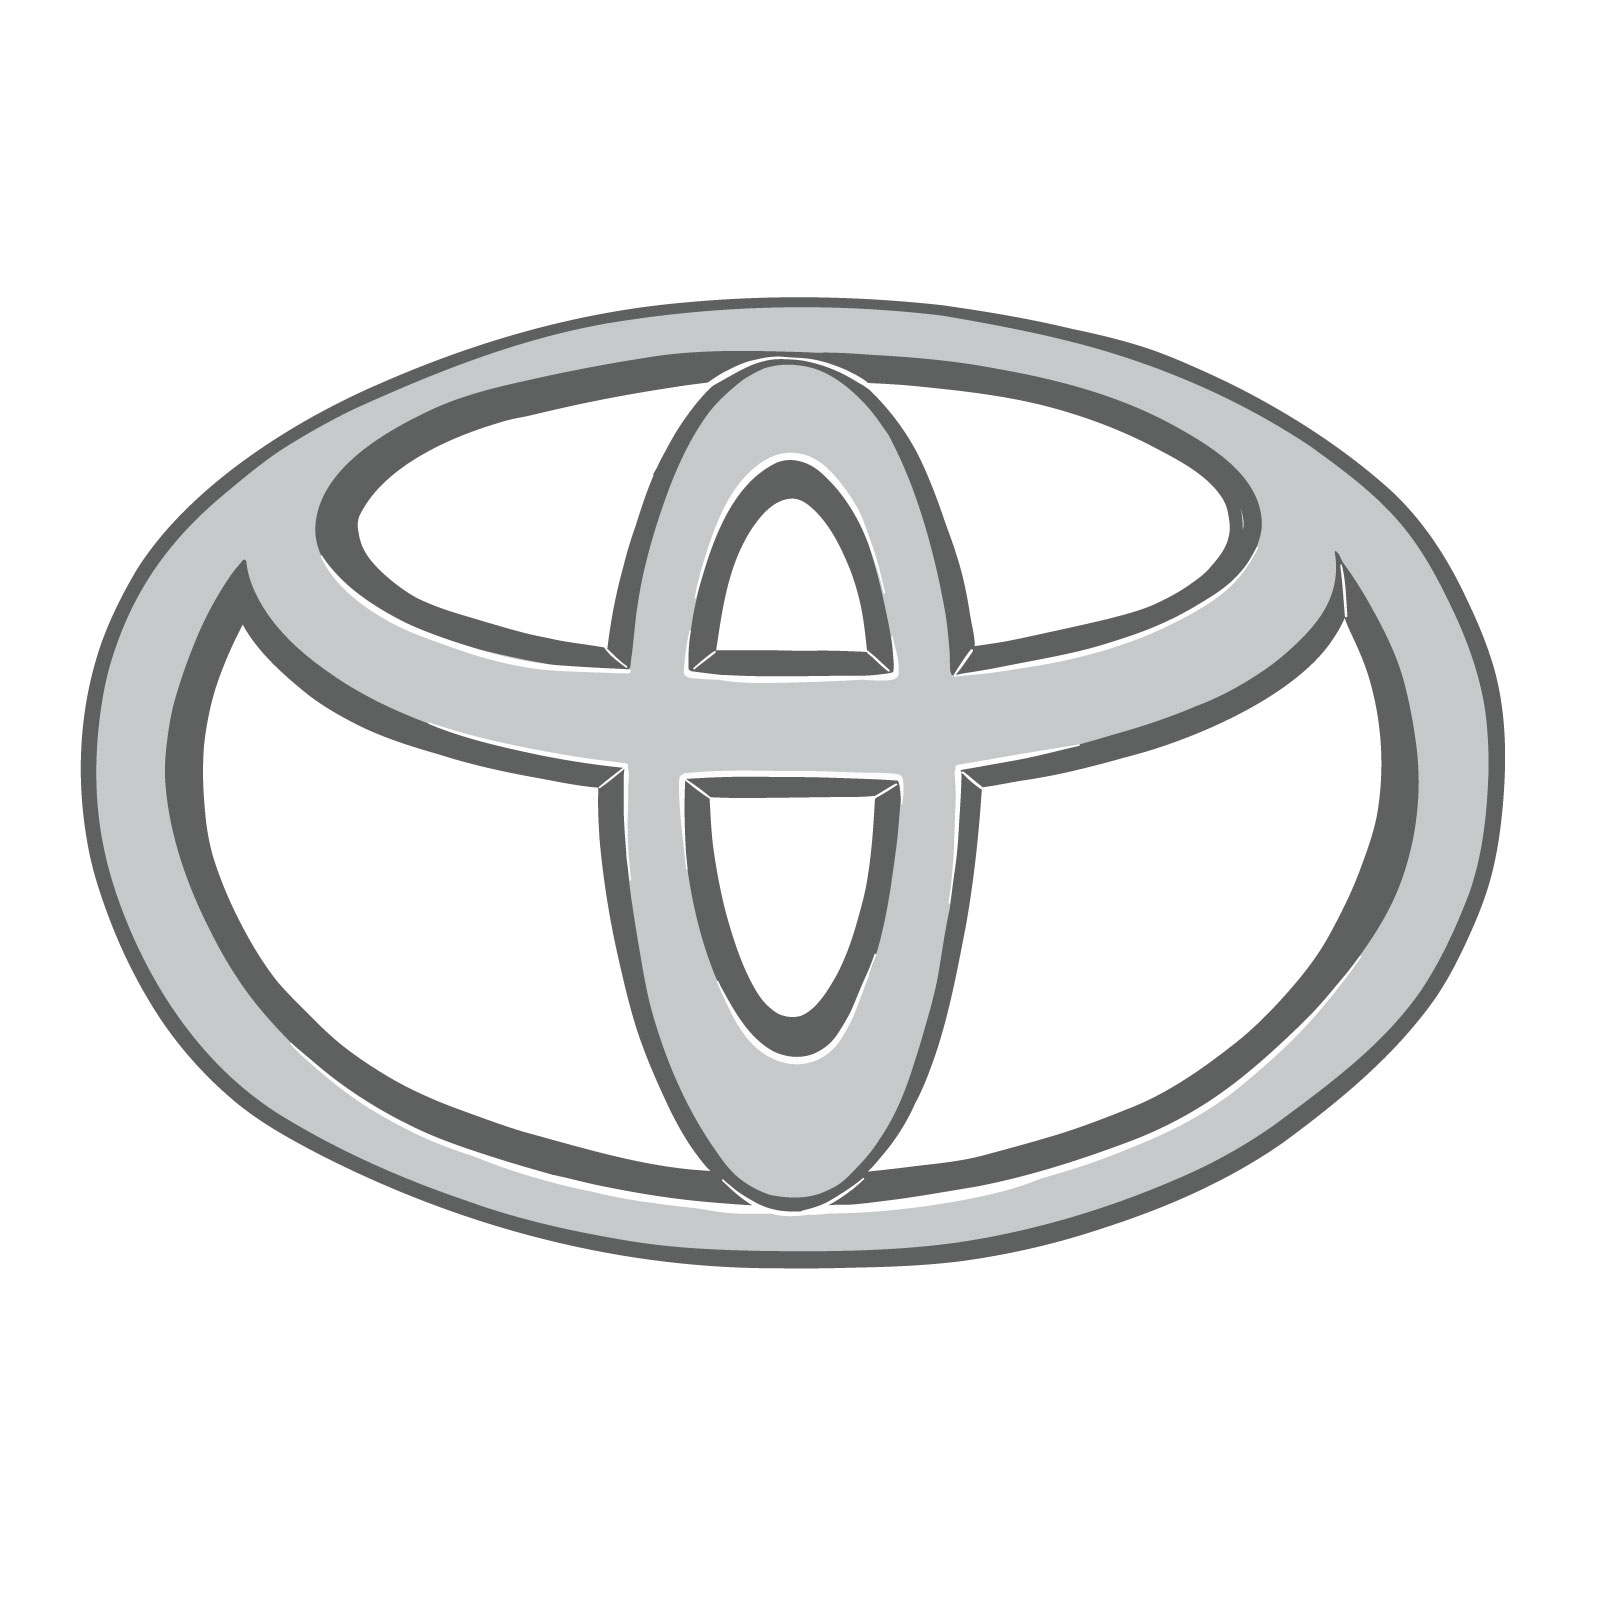 How to draw a Toyota logo - final step